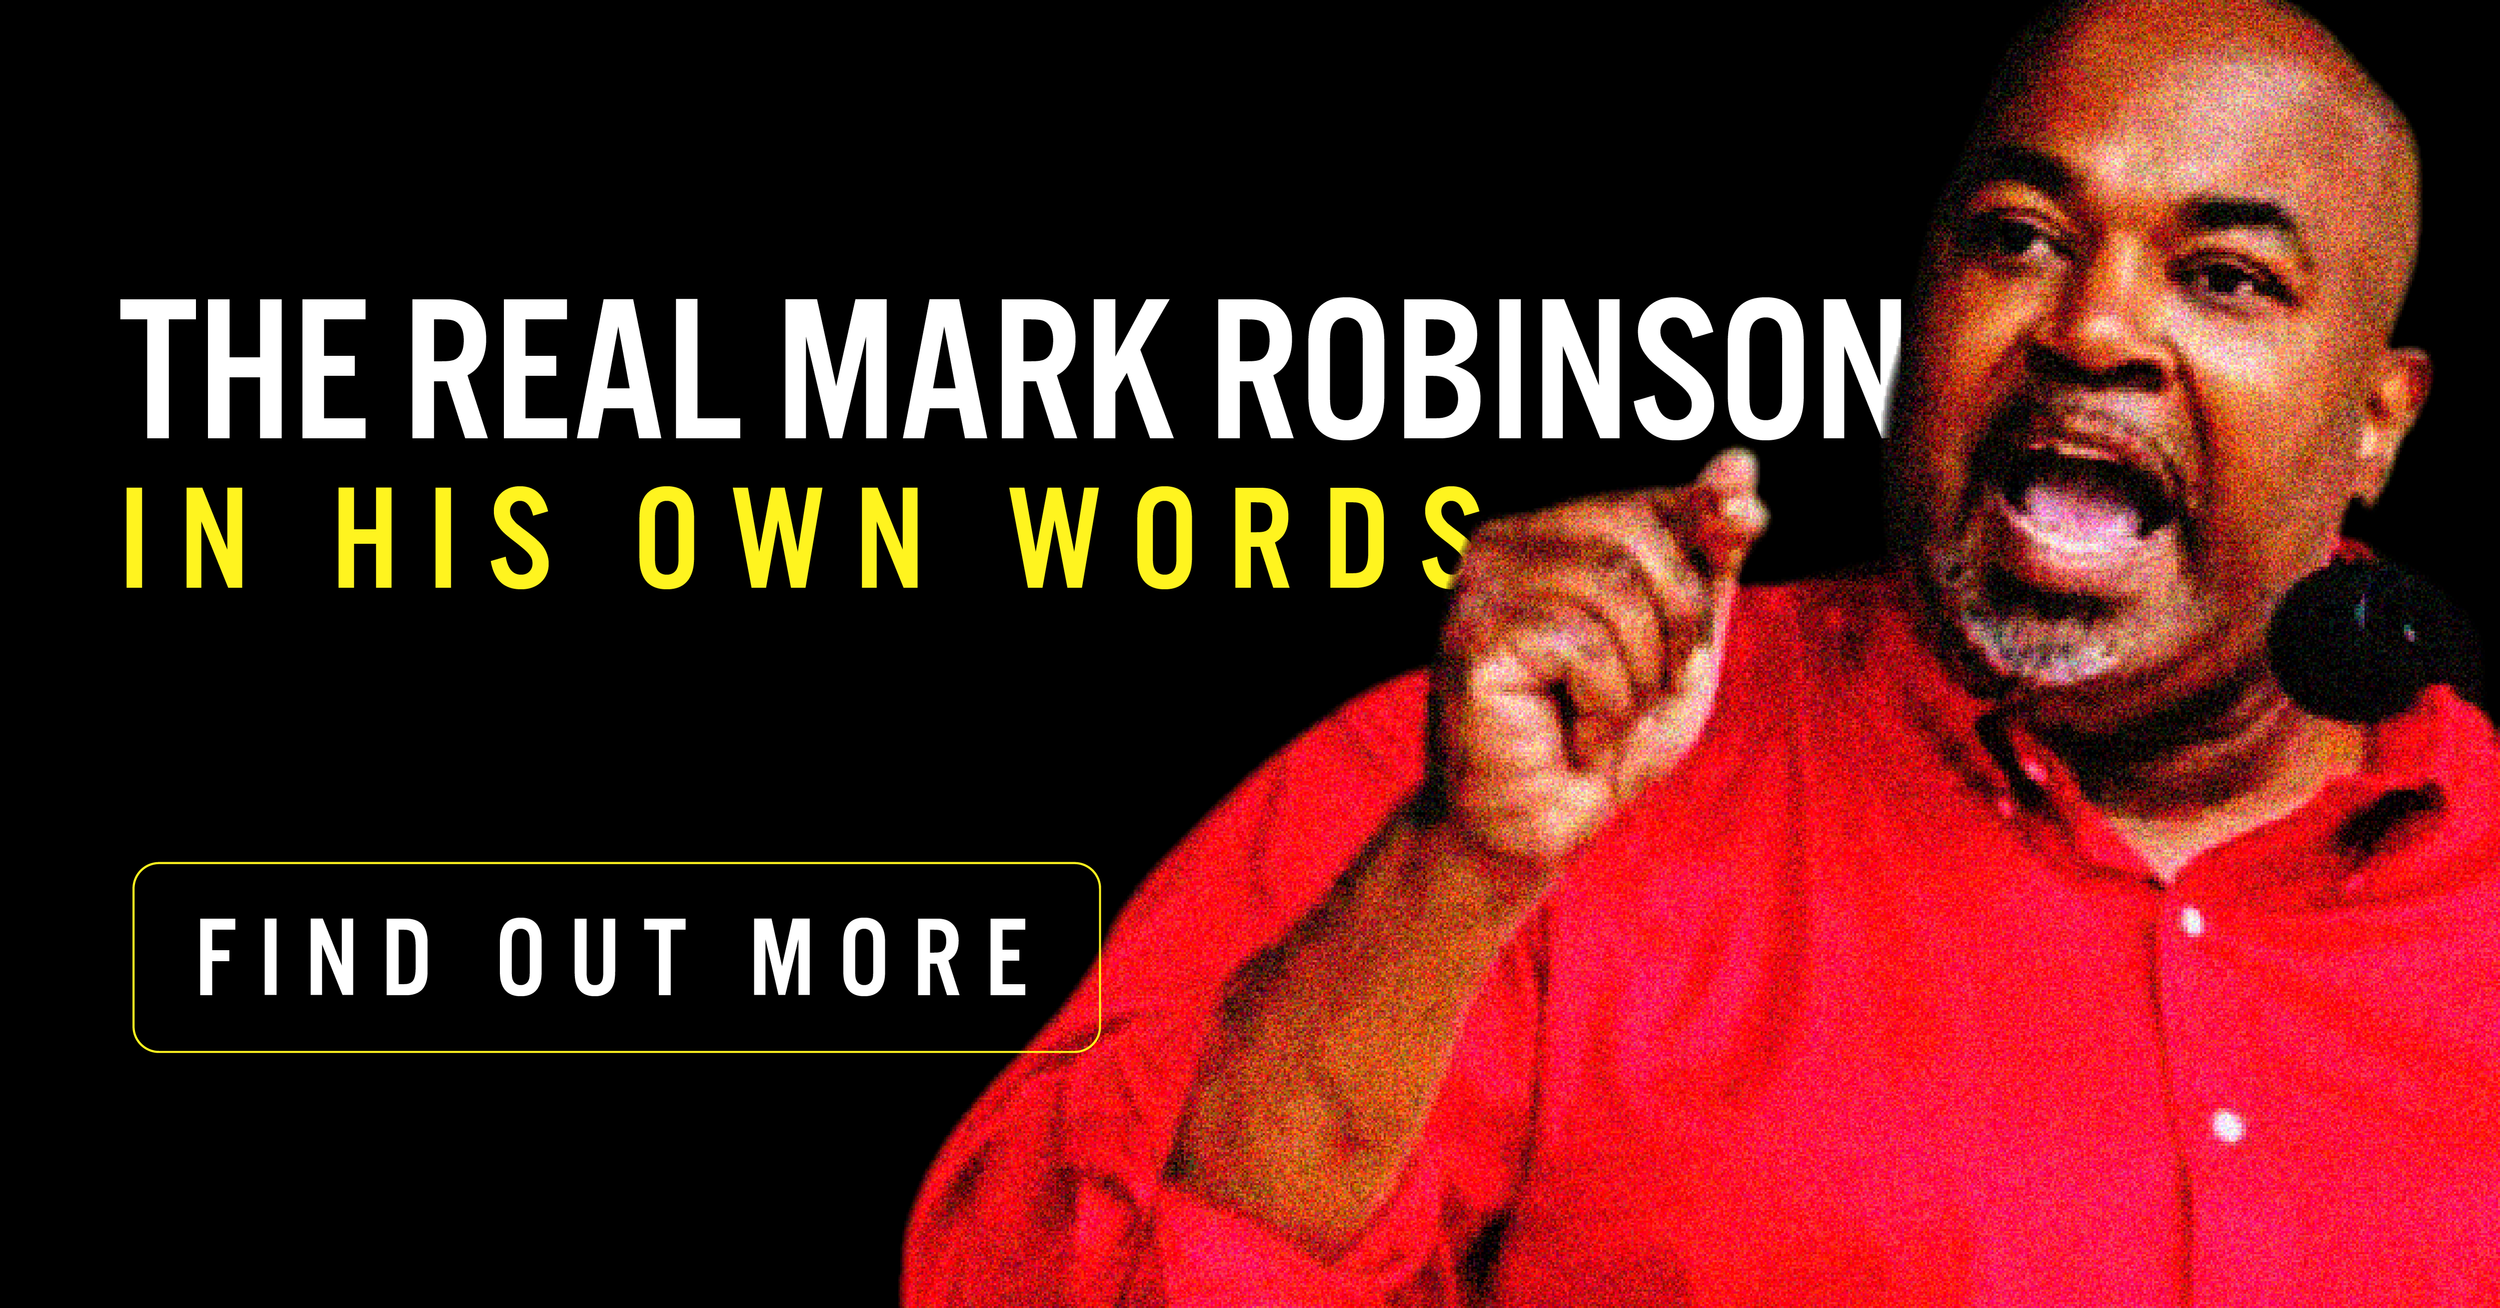 www.realmarkrobinson.com